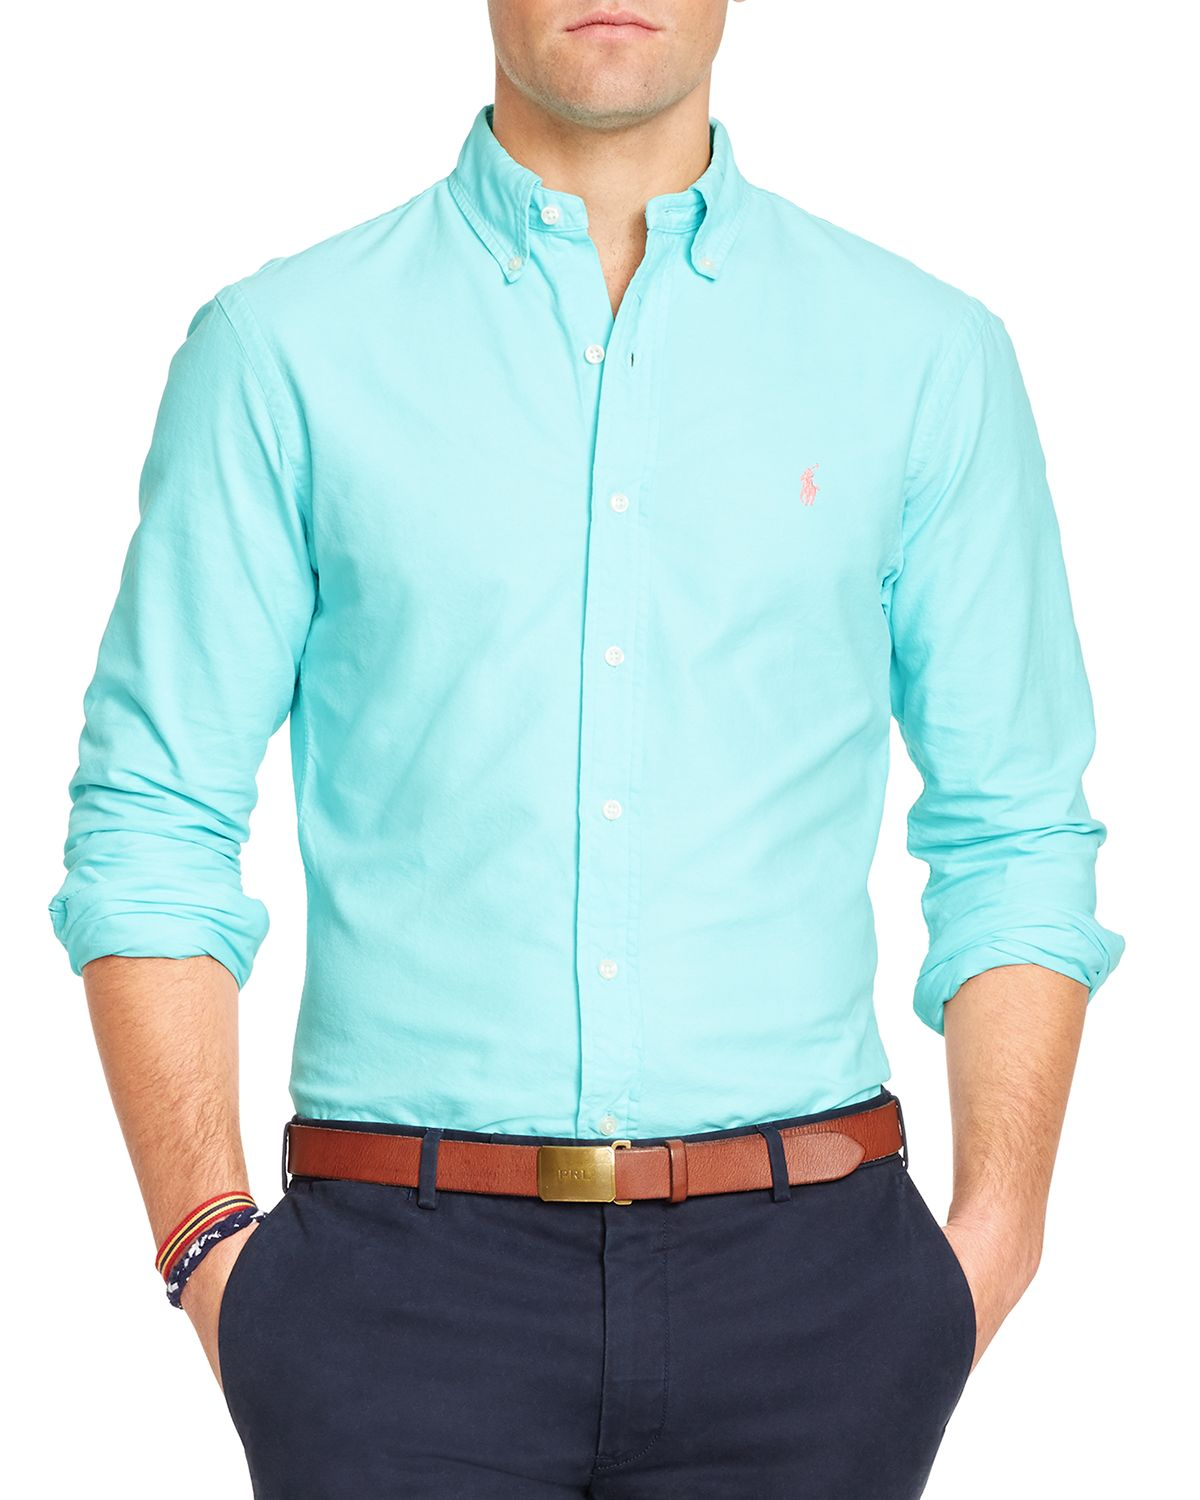 Ralph Lauren Polo Oxford Shirt - Slim Fit in Blue for Men - Lyst